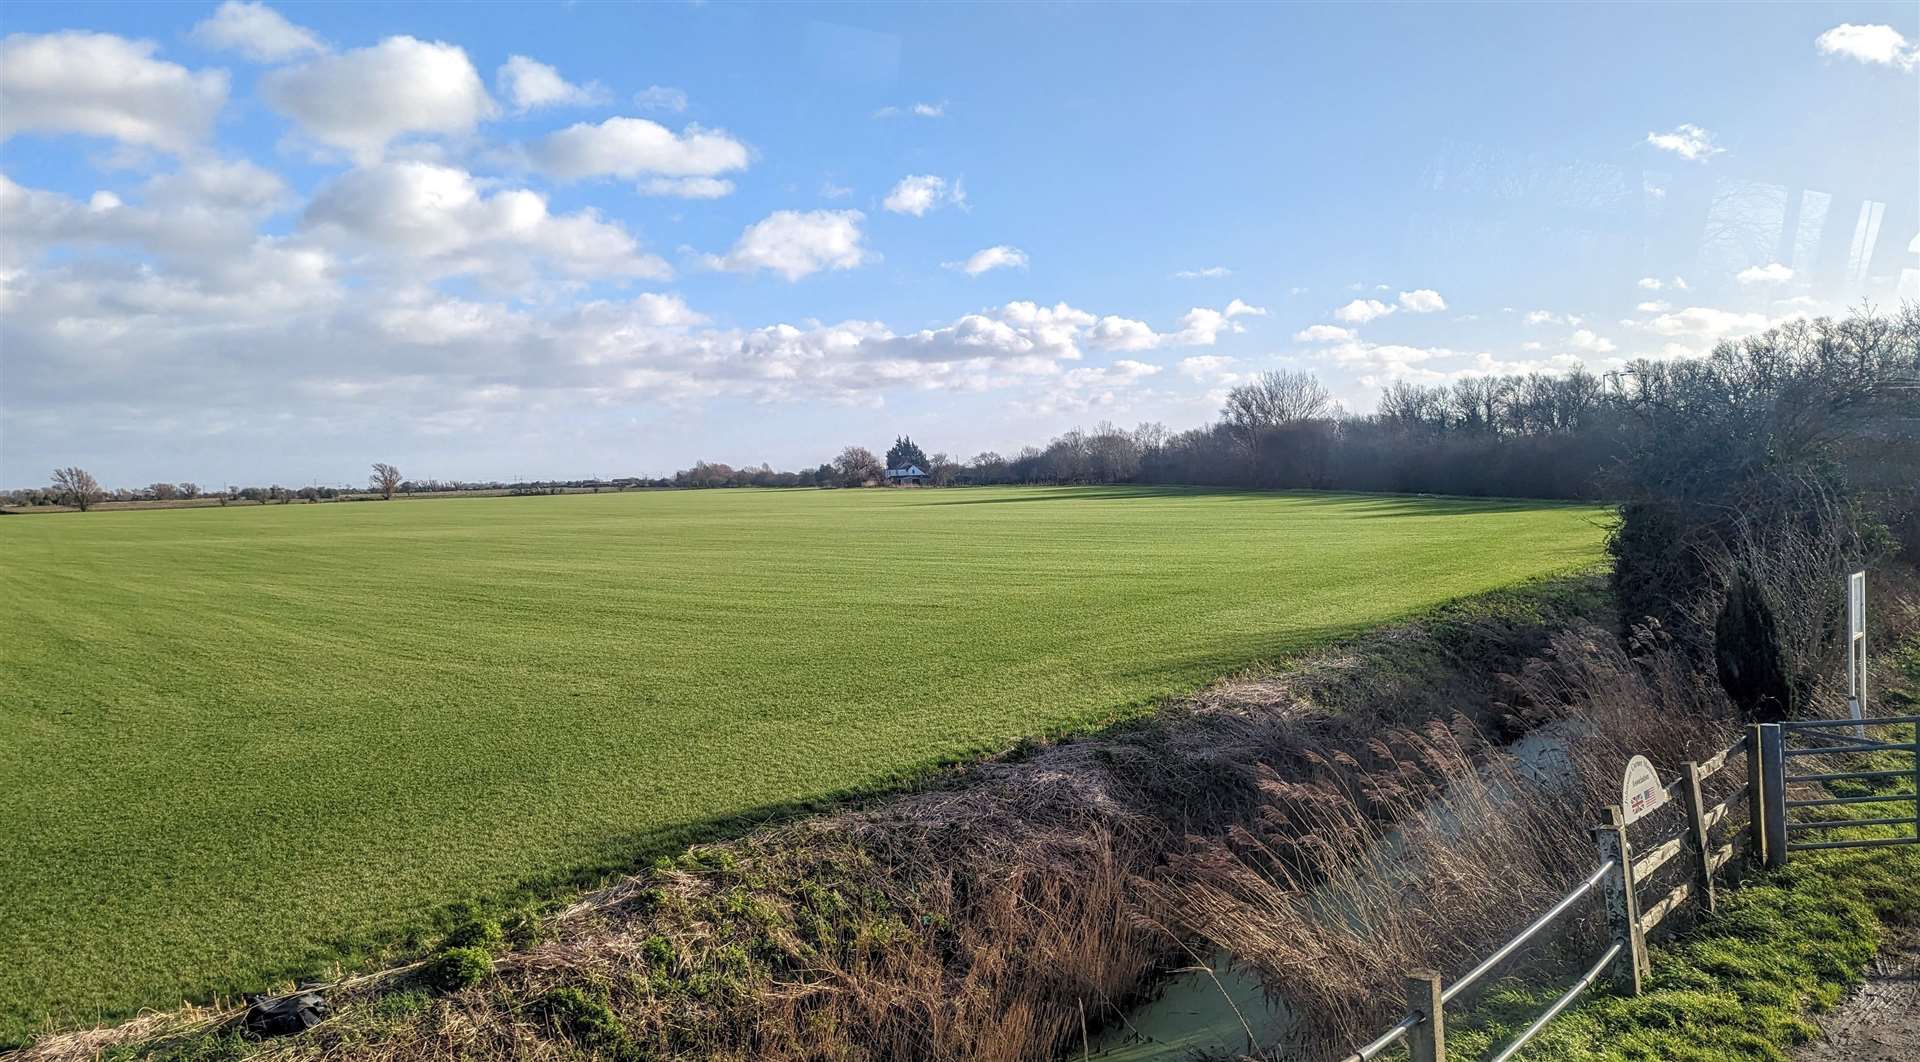 Views of the countryside outside Ashford